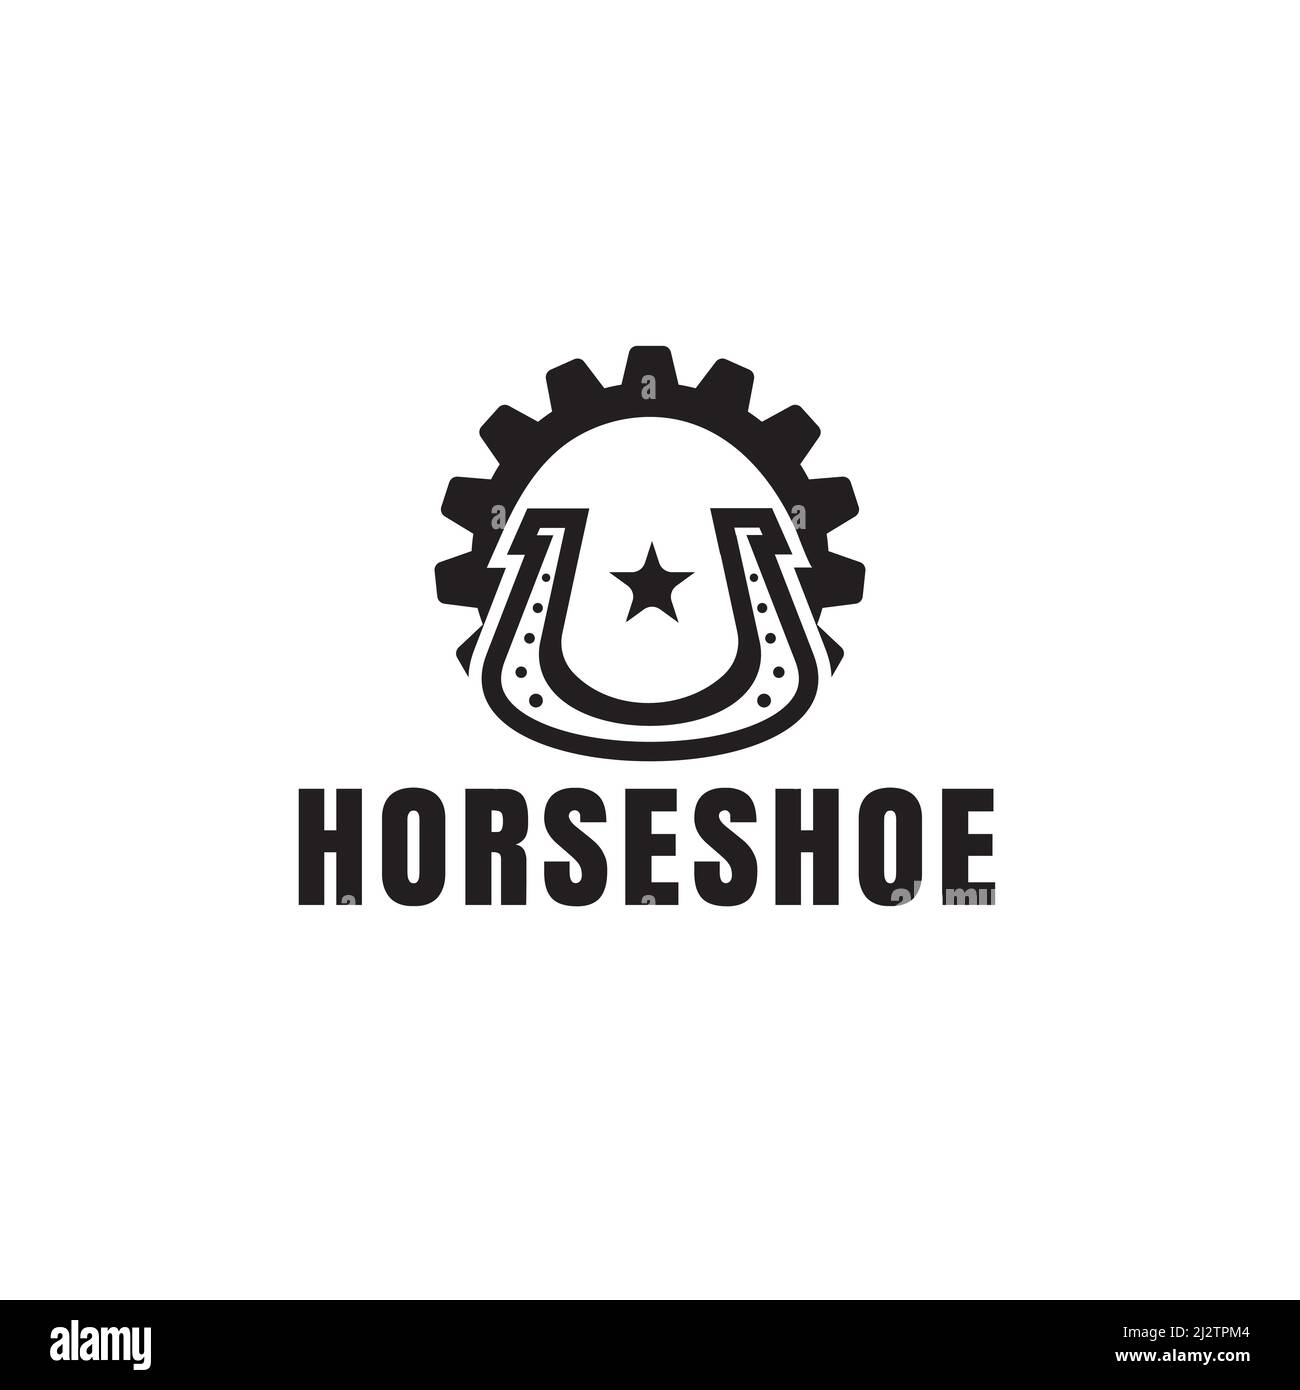 Horseshoe vector logo illustration for Country,Western,Cowboy,Farm Stock Vector